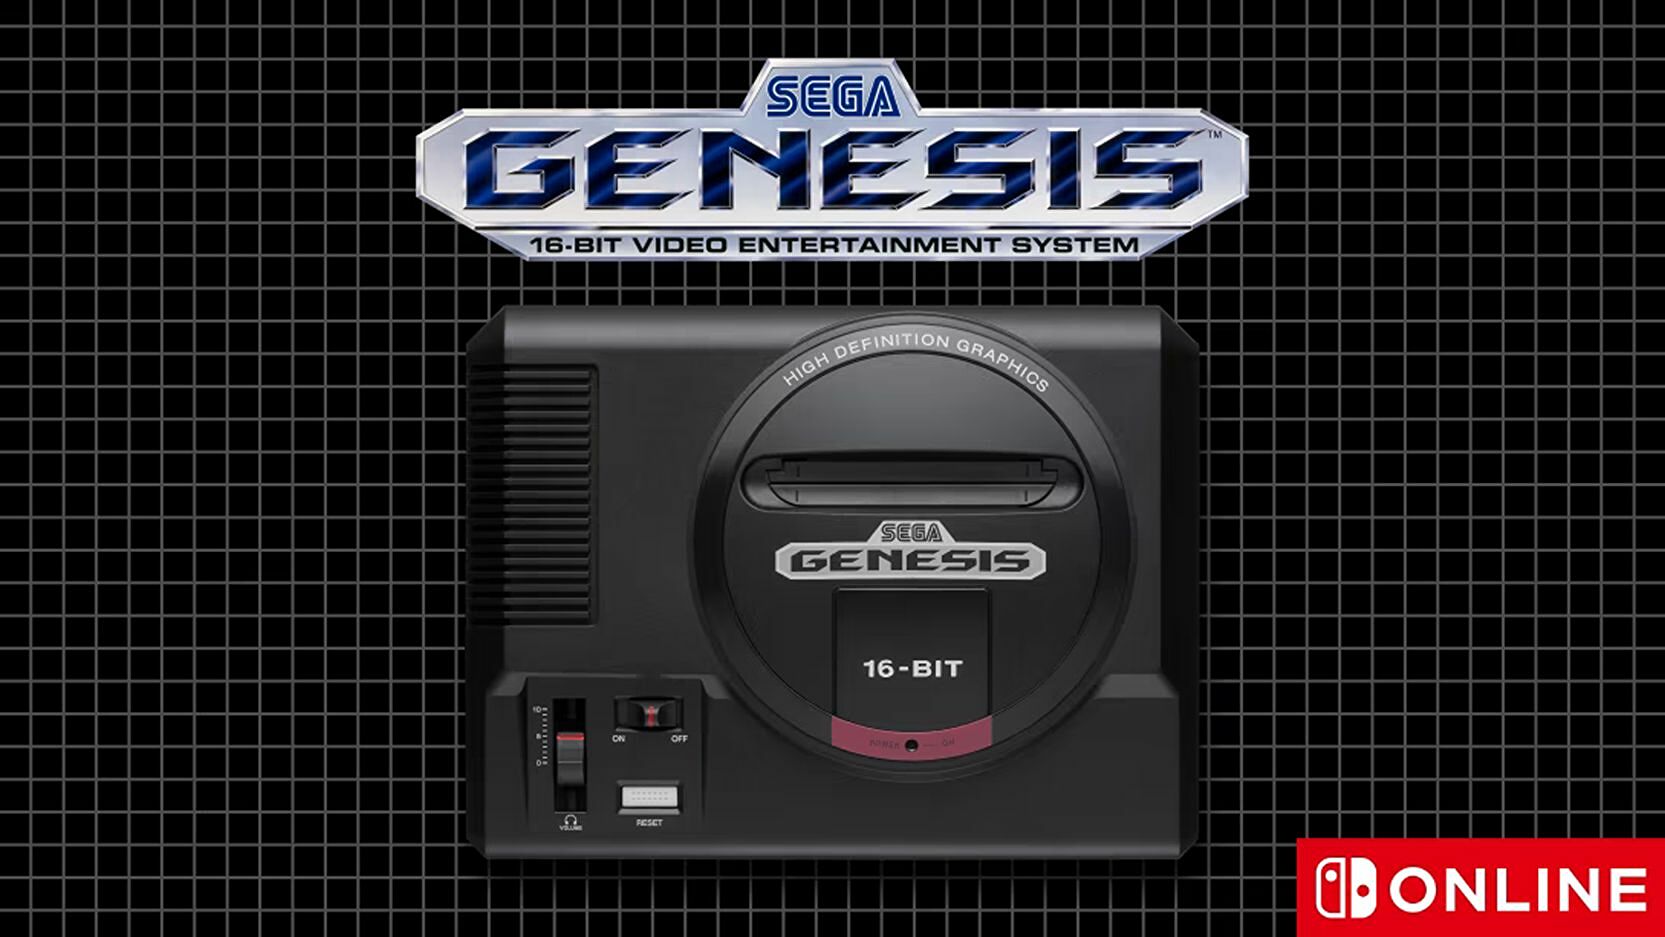 Sega Genesis Switch Online